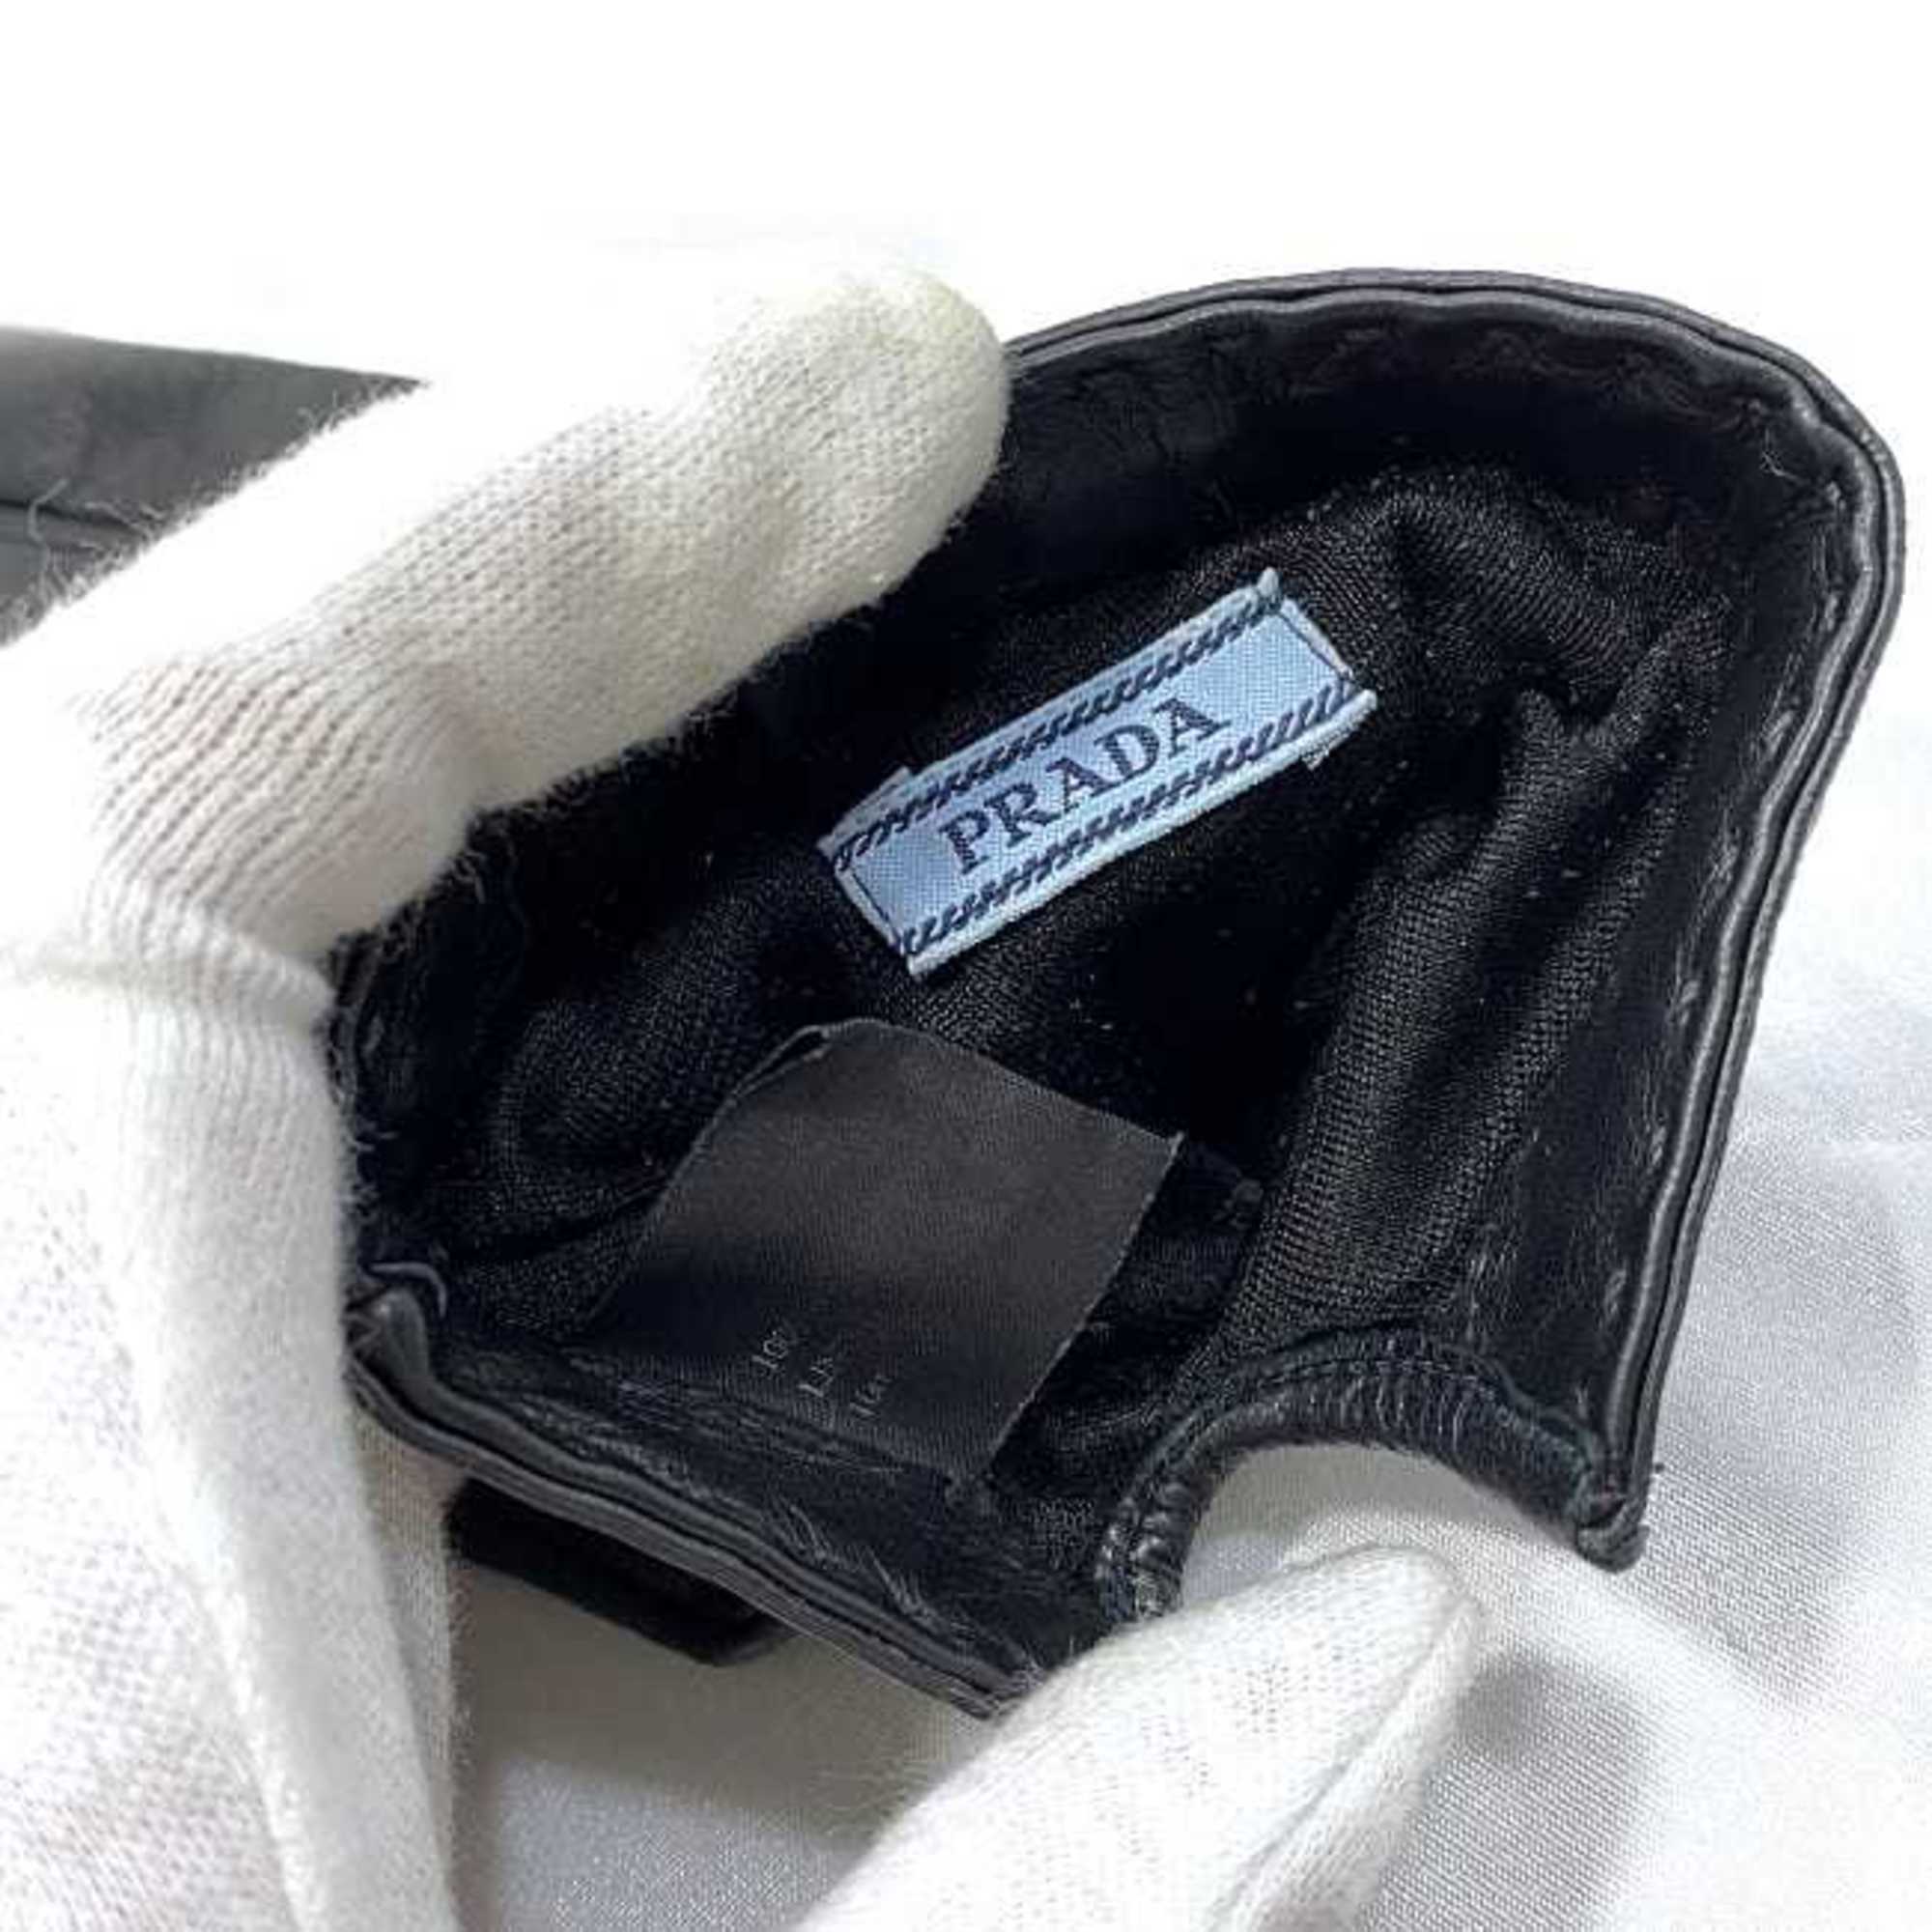 Prada Gloves Black NERO 1GG746 Size 8 Leather PRADA Triangle Plate